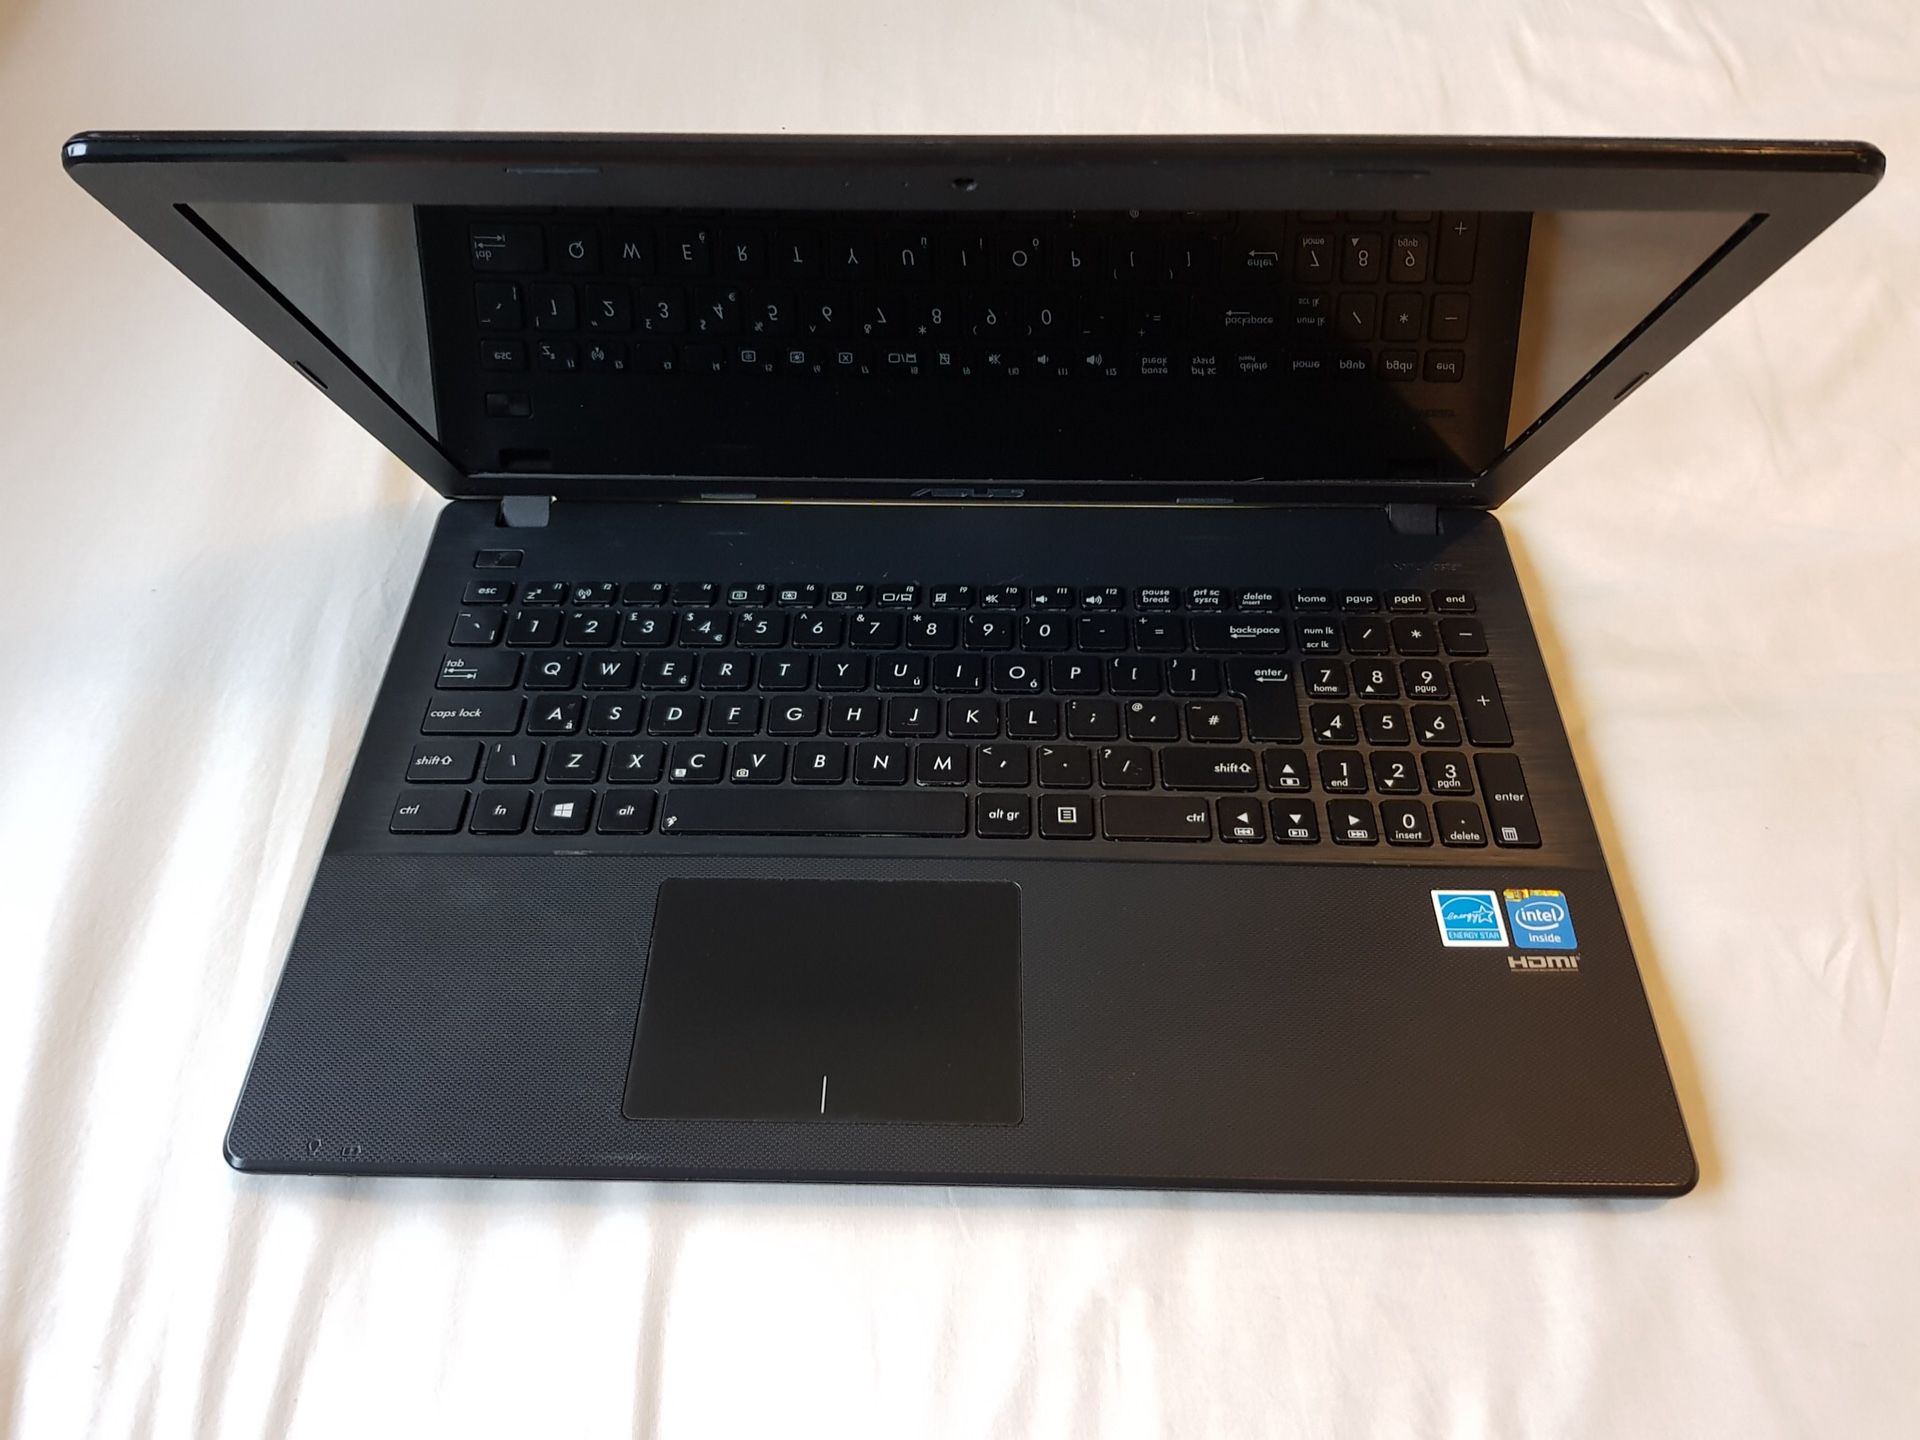 Asus X551 Laptop W/ 15” LCD screen